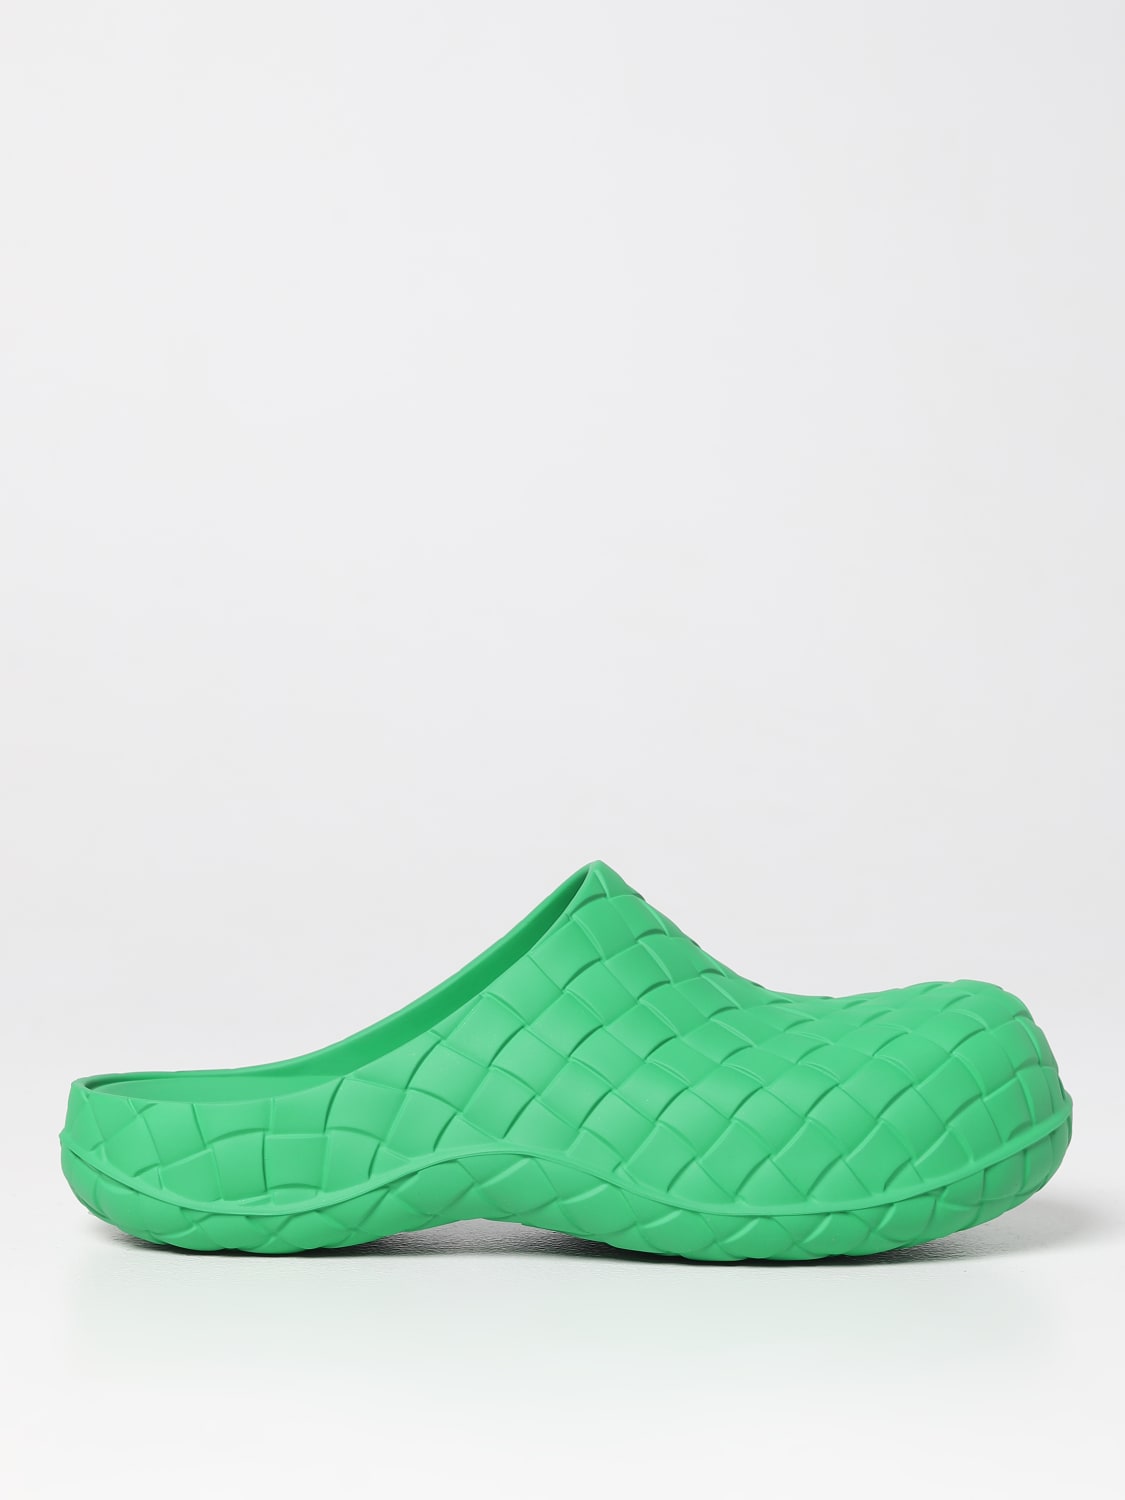 Perceptueel Respectvol Inschrijven BOTTEGA VENETA: sabots in woven rubber - Green | Bottega Veneta sandals  741339V11T0 online on GIGLIO.COM